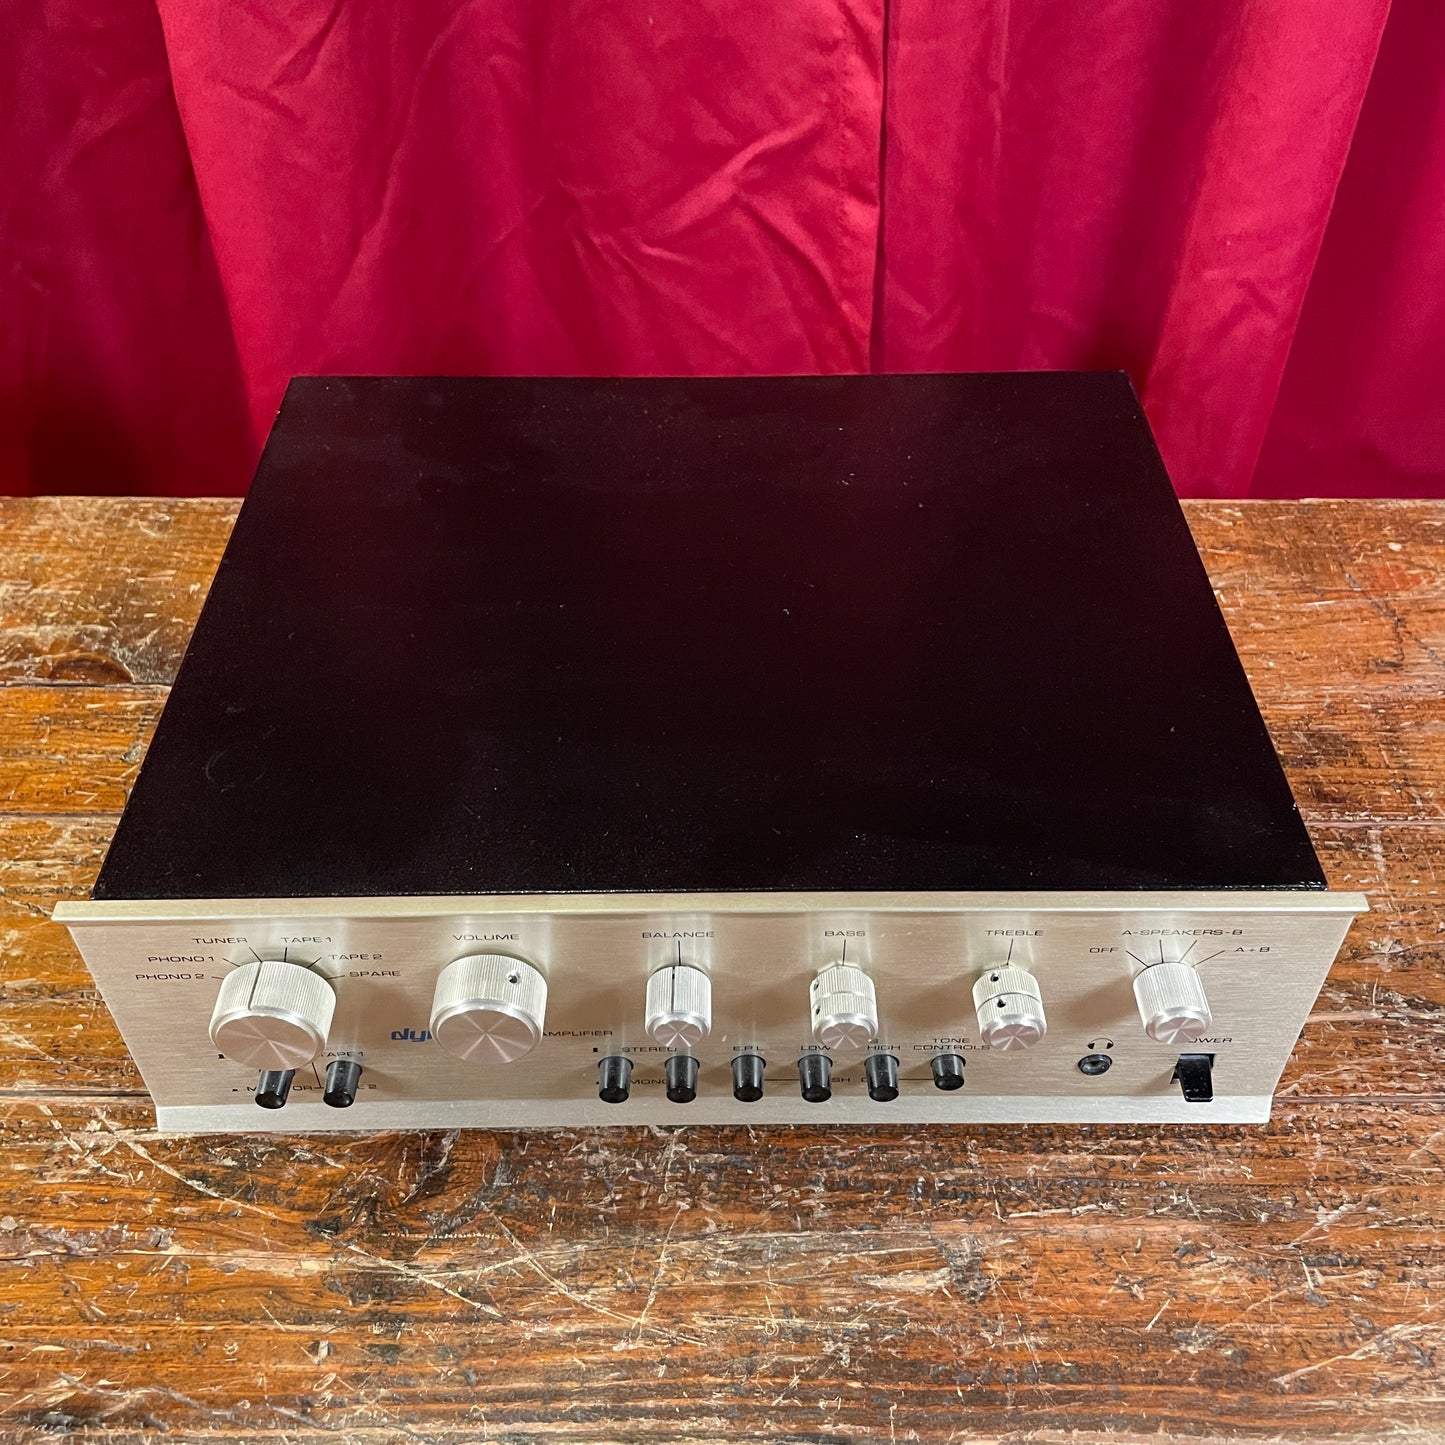 Dynaco PAT-5 Stereo Hi-Fi Preamplifier Pre Amp